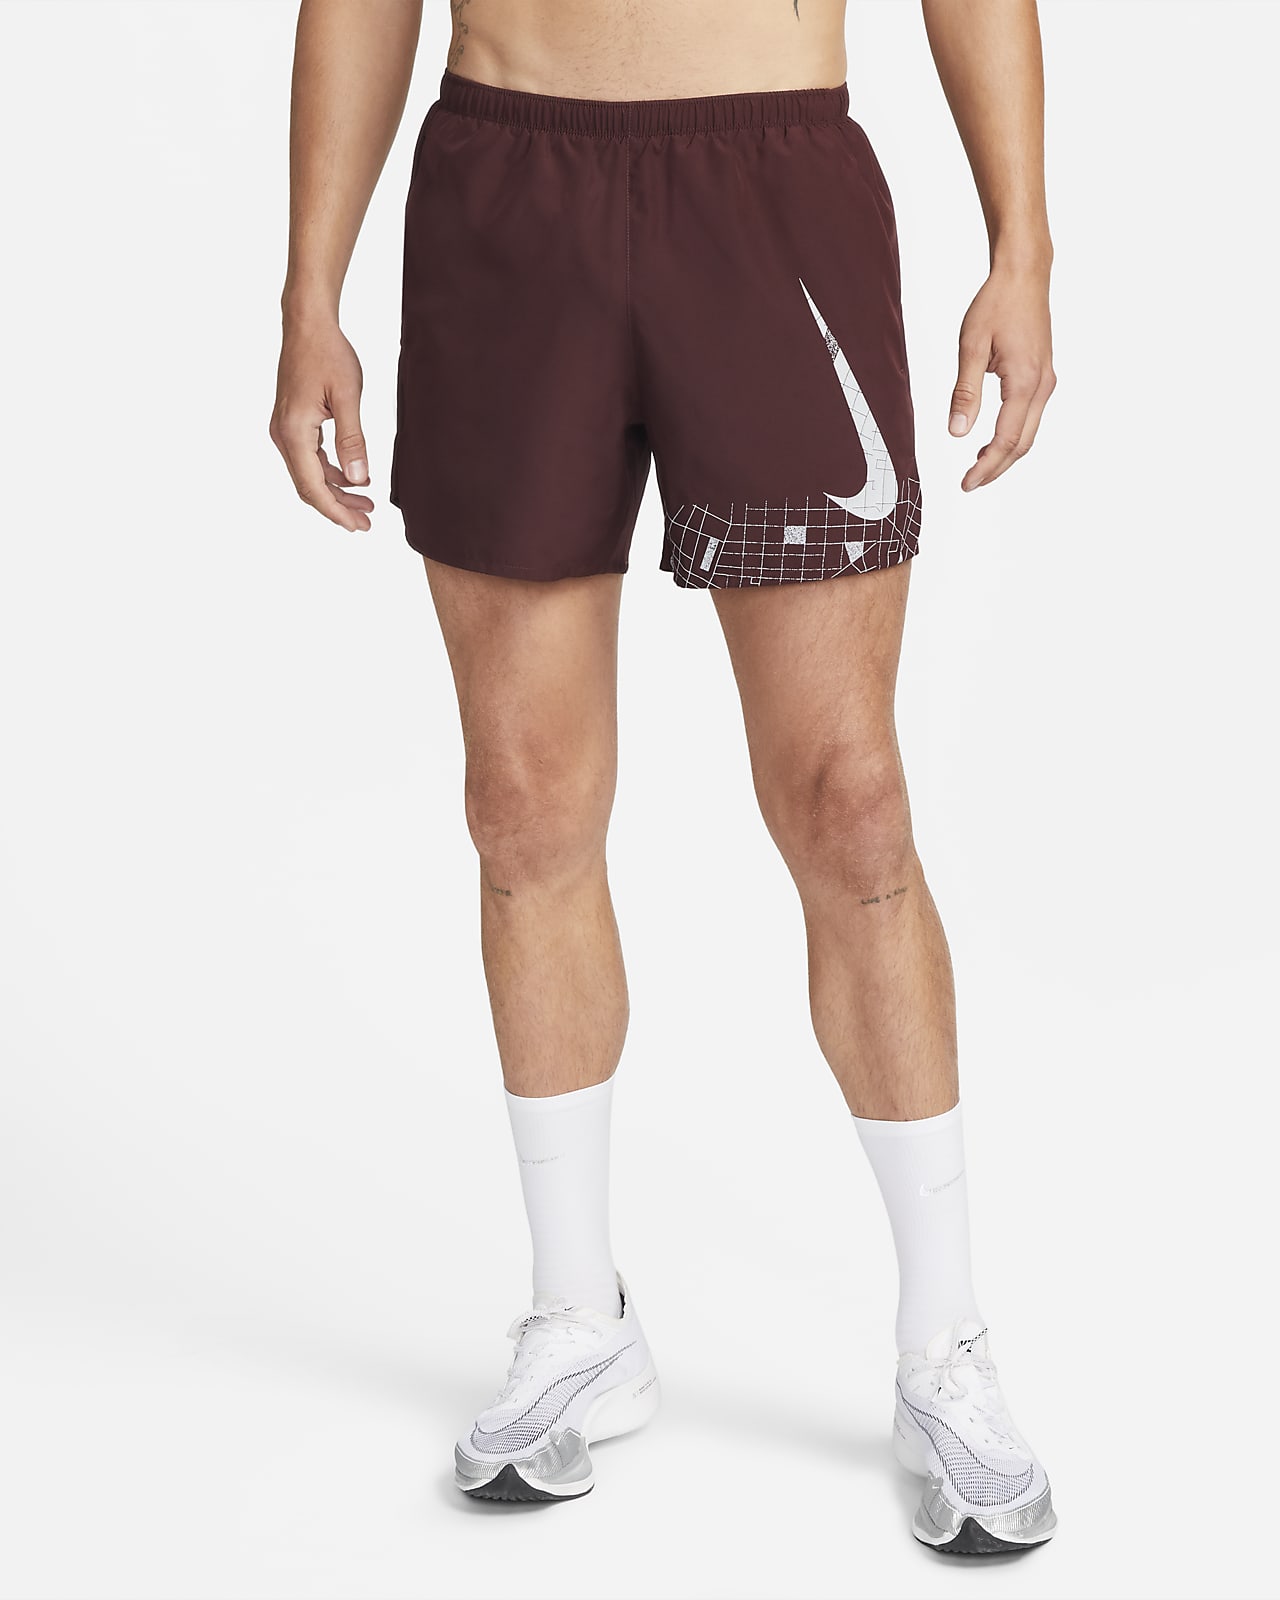 de running con ropa interior integrada de 18 cm para hombre Nike Dri-FIT Run Division Challenger. Nike.com